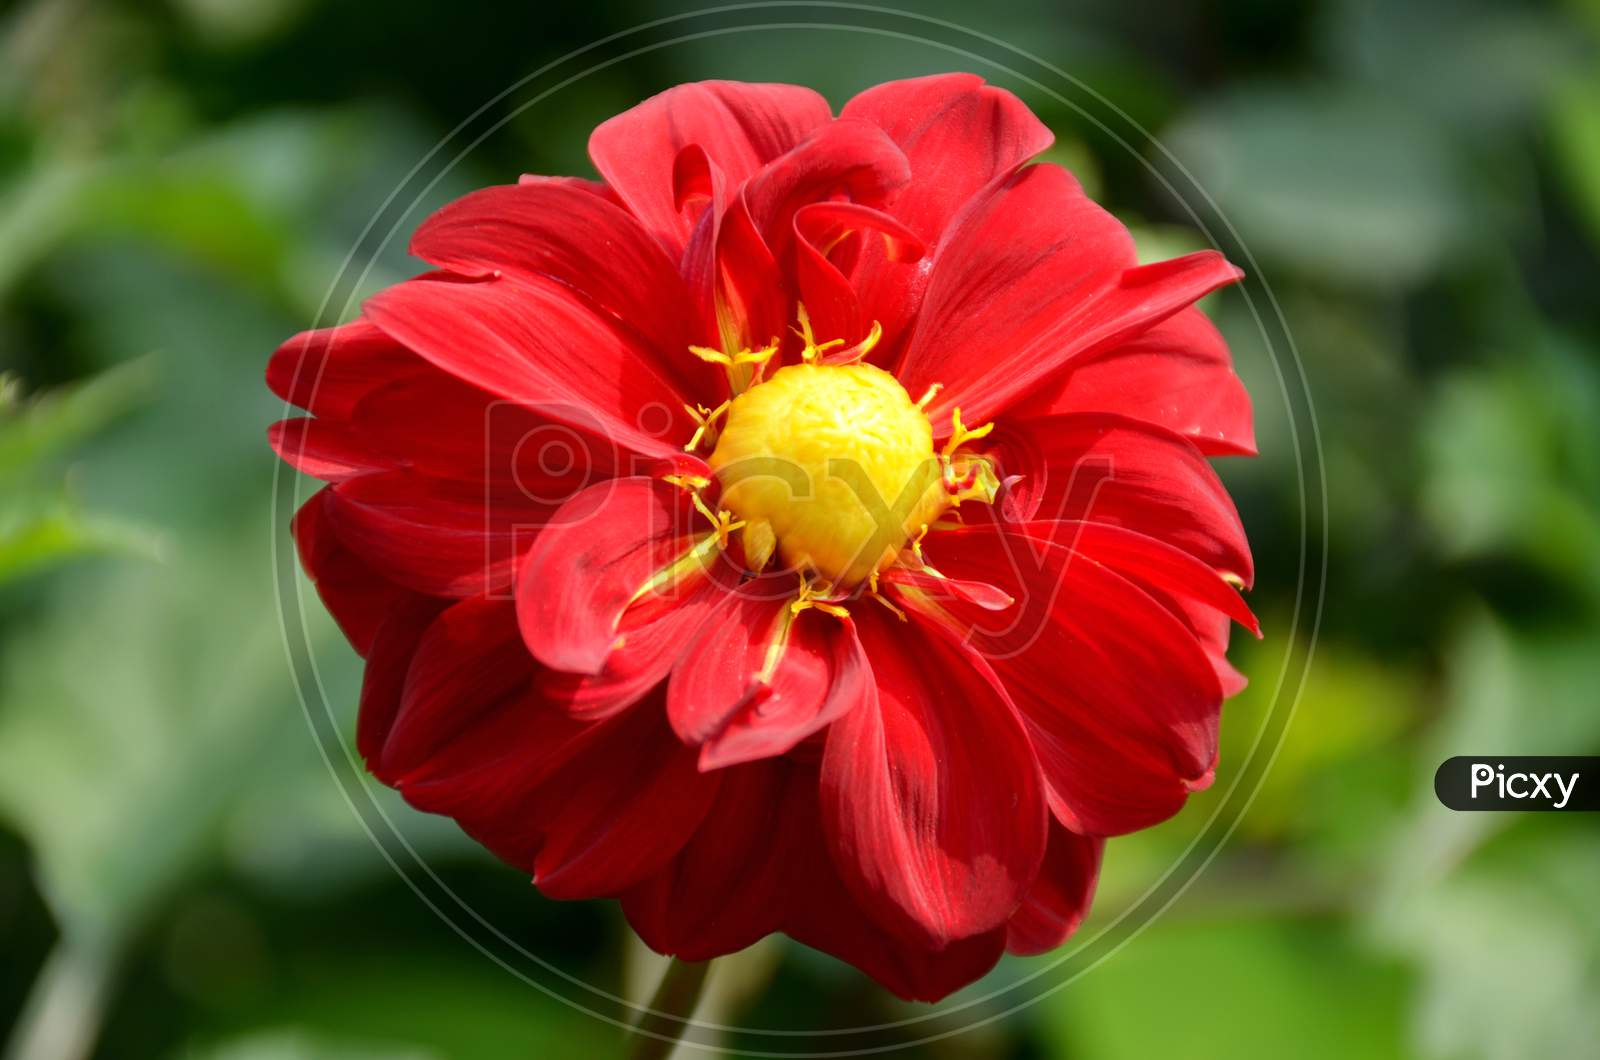 beautifull red dahlia flower in the guardan.